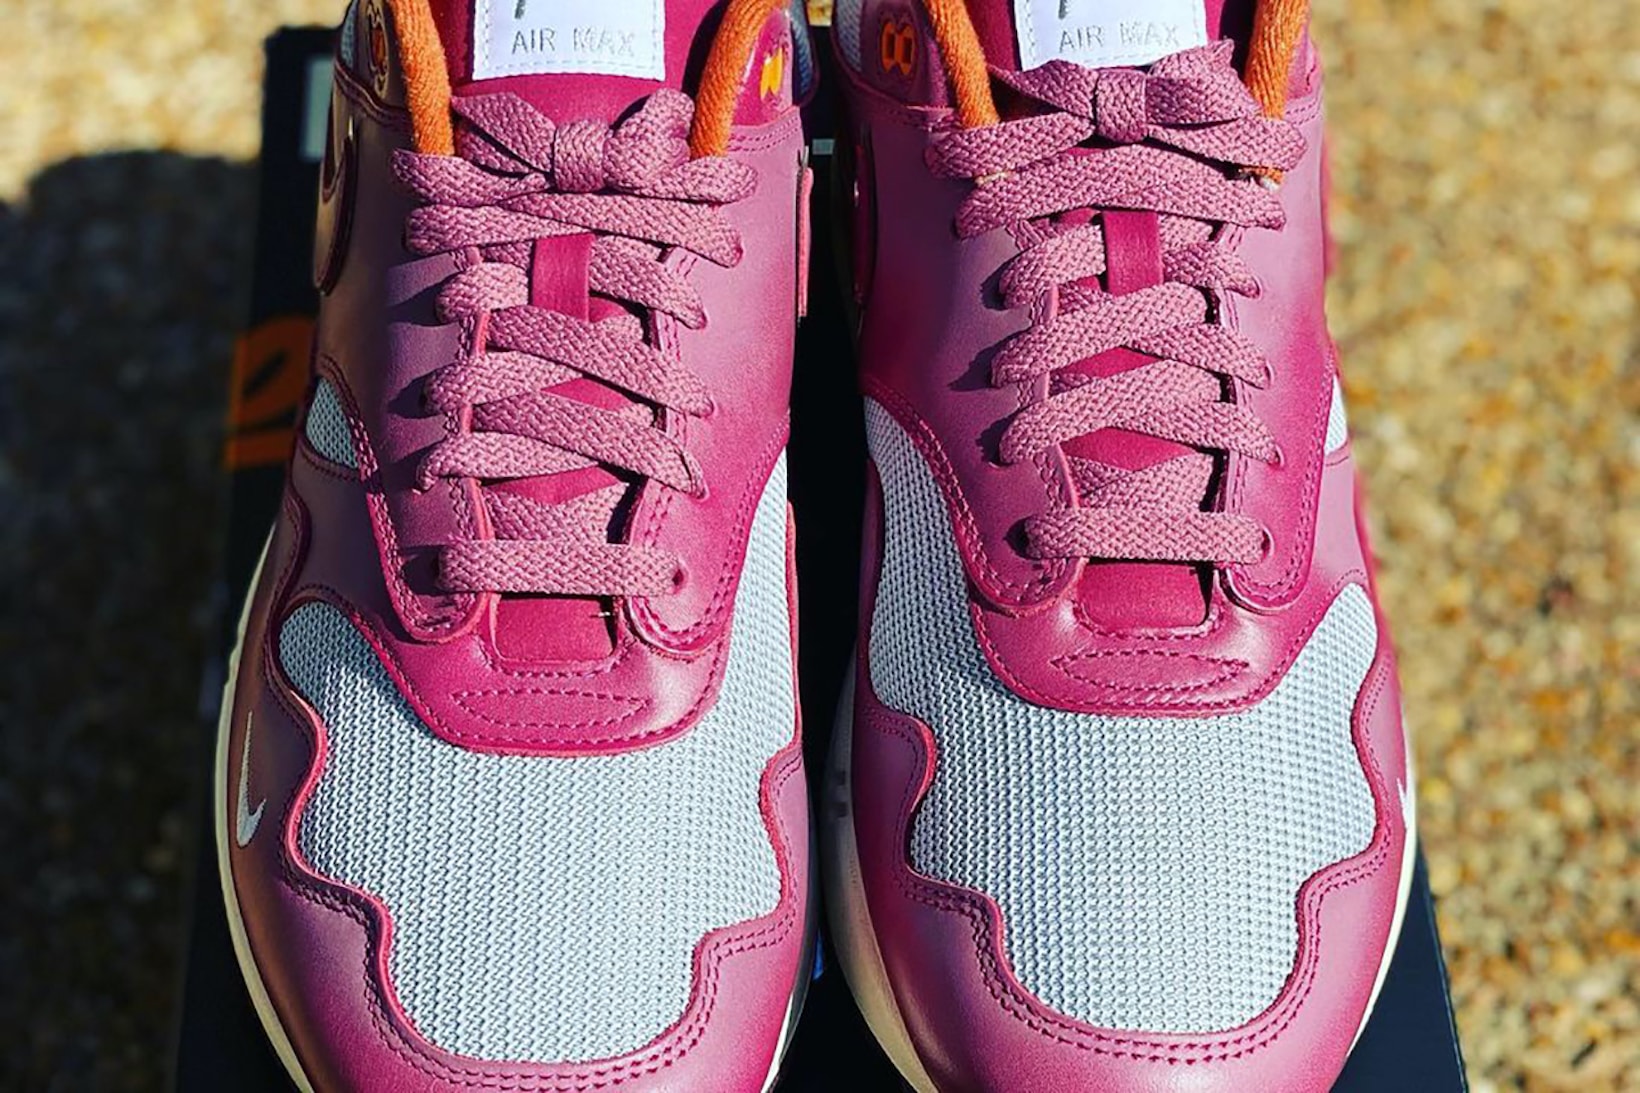 Patta Nike Air Max 1 AM1 Night Maroon Pink Orange Gray Sneakers Footwear Kicks Shoes